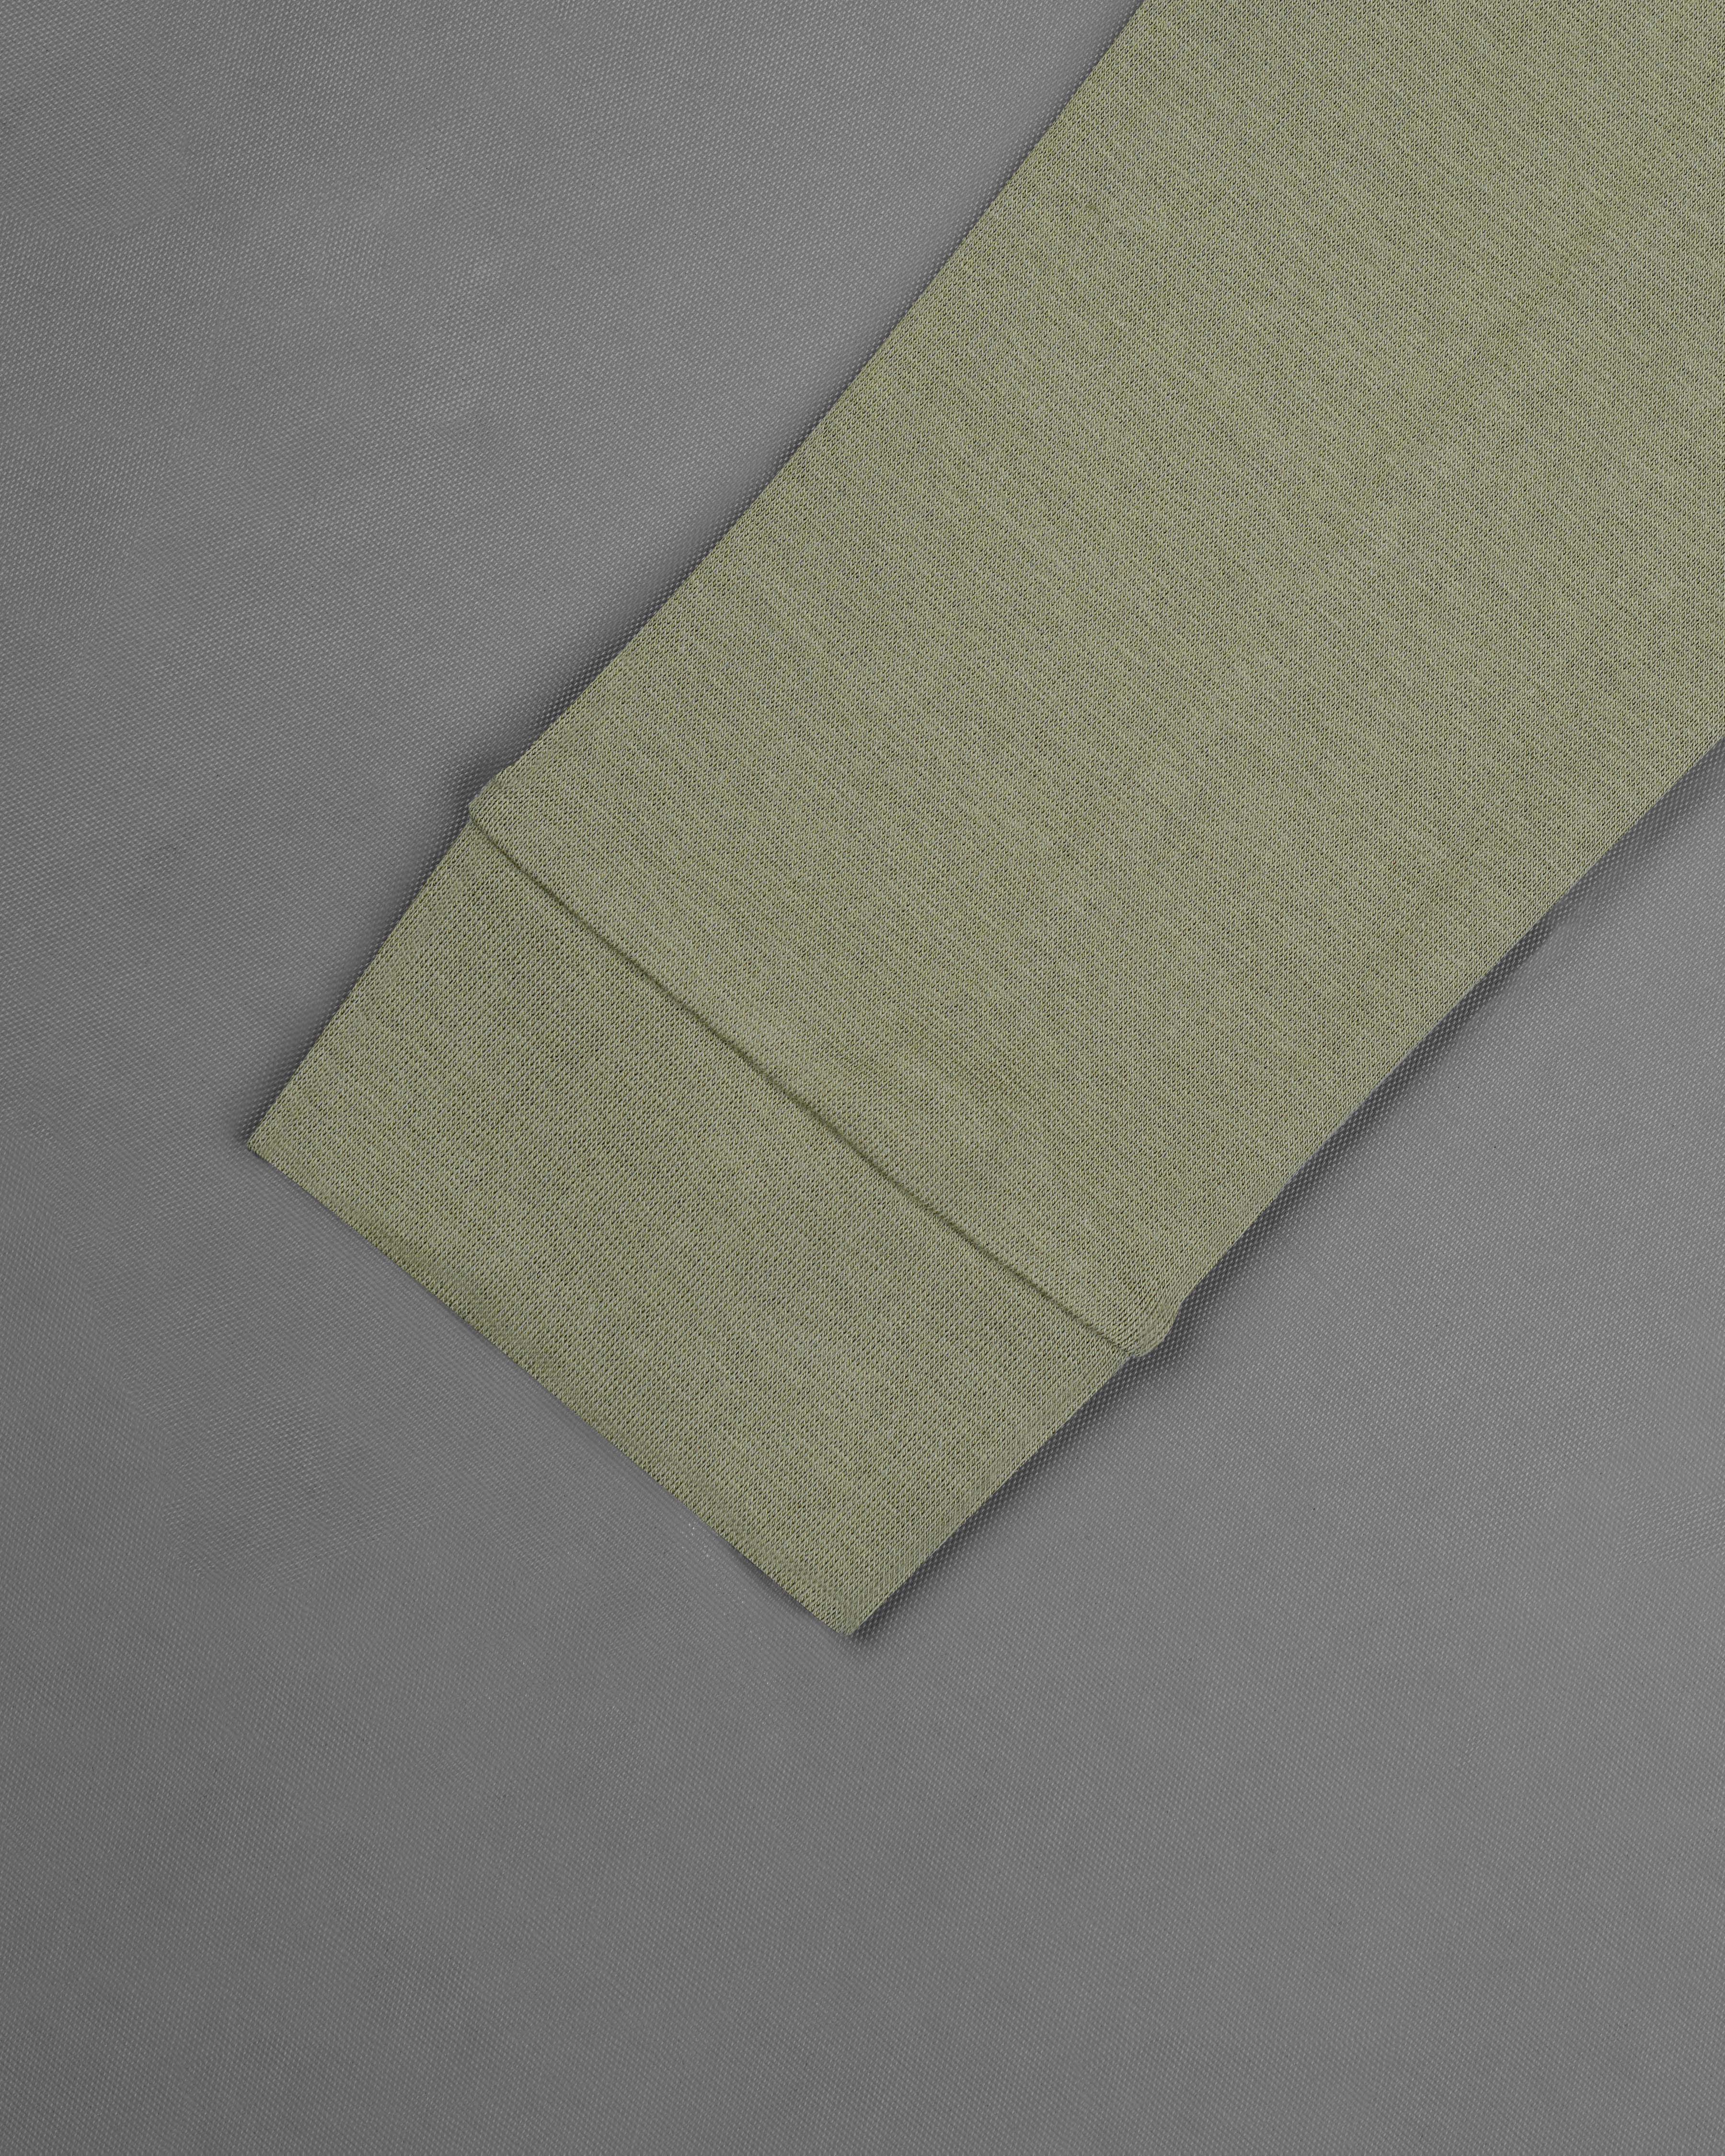 Shadow Green Full Sleeve Premium Cotton Jersey Sweatshirt TS632-S, TS632-M, TS632-L, TS632-XL, TS632-XXL, TS632-3XL, TS632-4XL